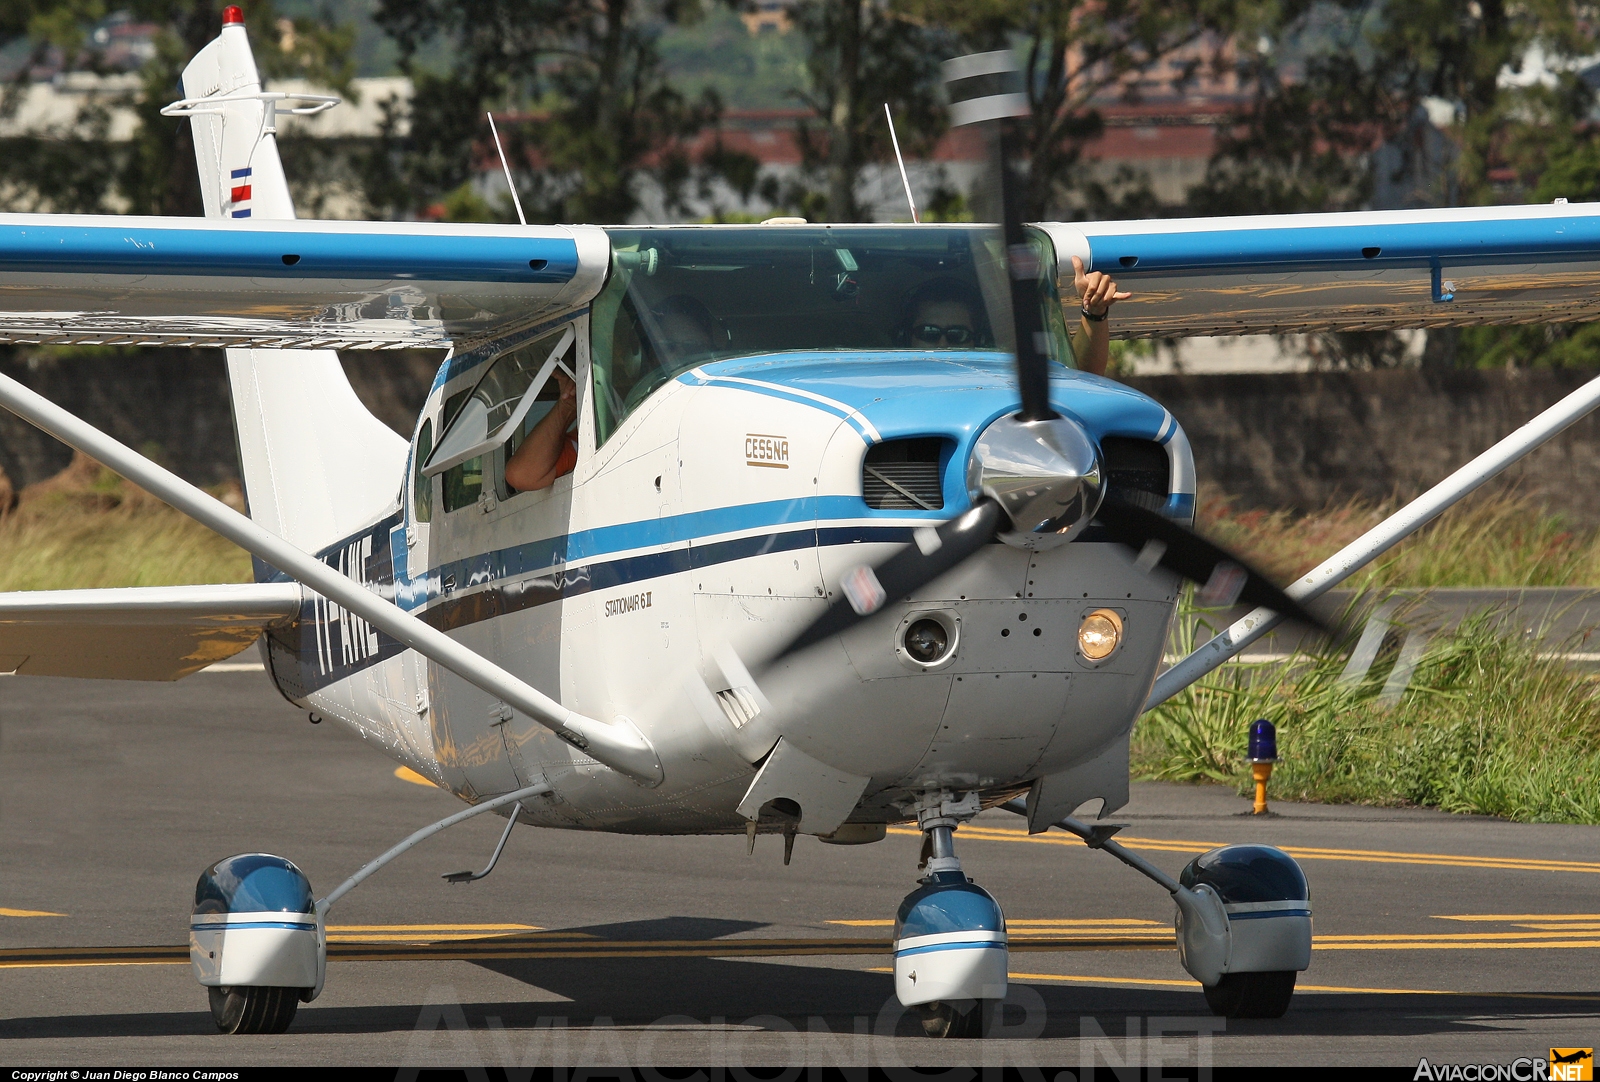 TI-AWE - Cessna U206 Stationair II - Privado (Hotel Punta Islita)